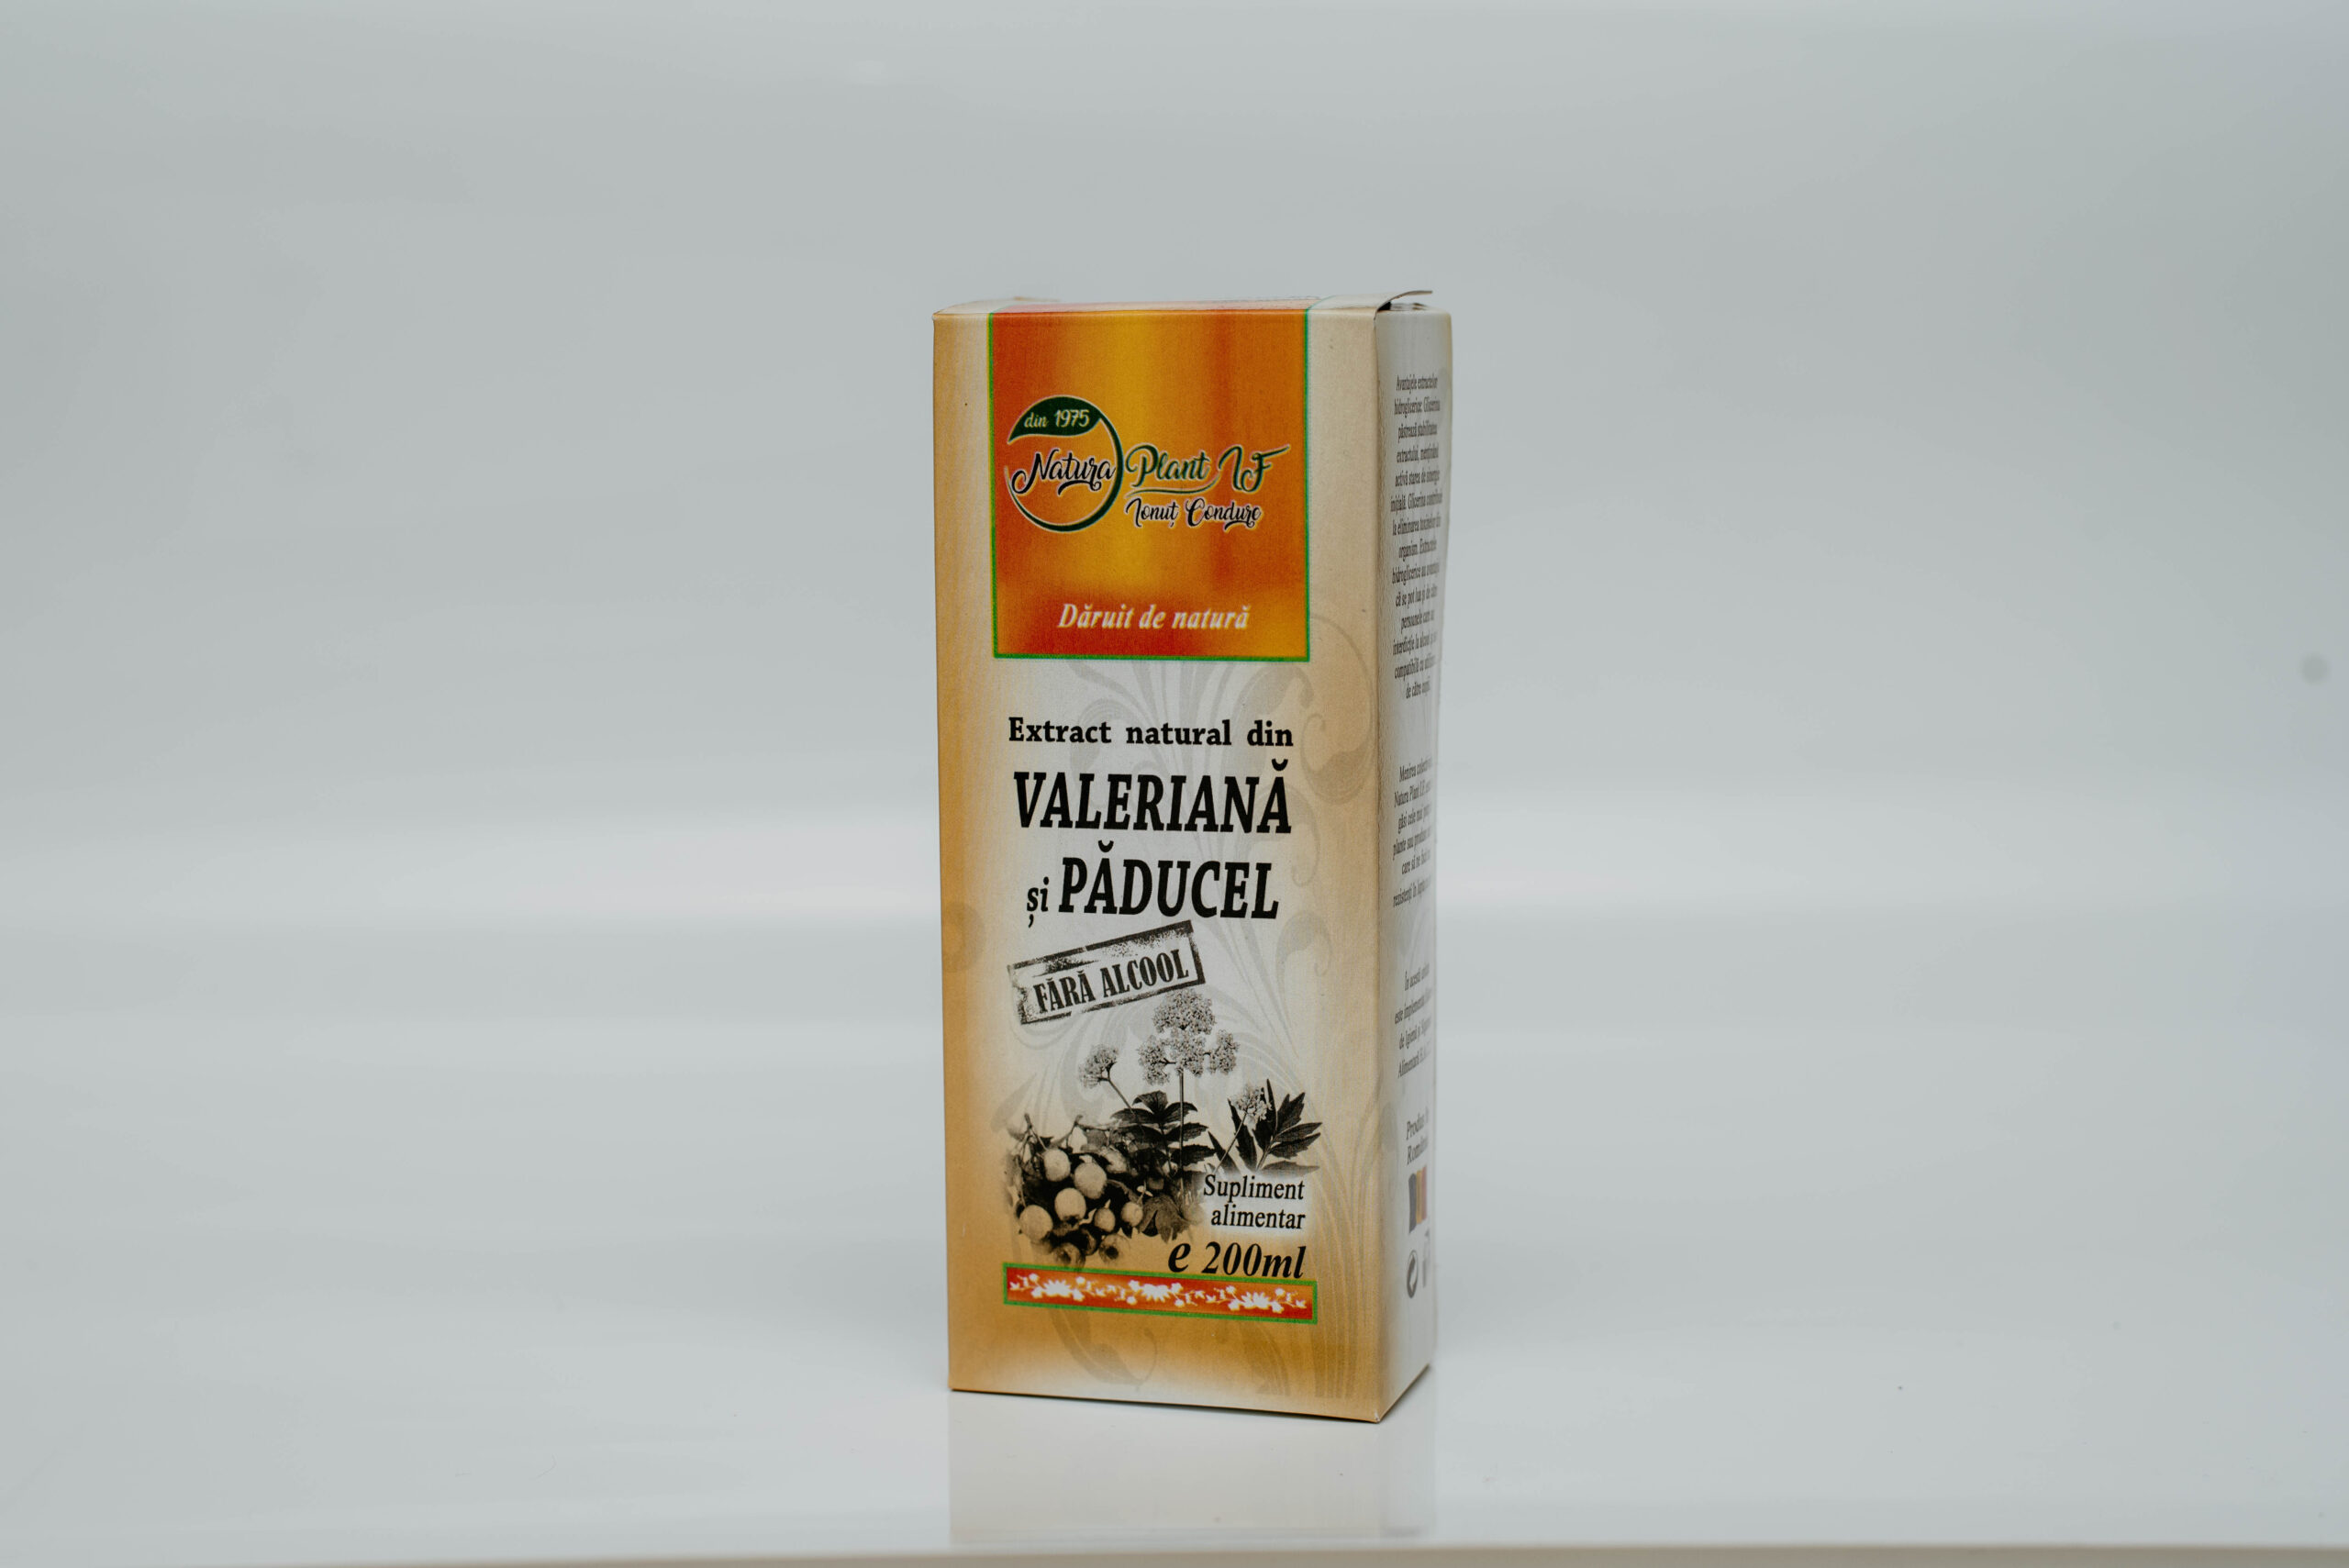 Extract din Valeriana si Paducel fara alcool  Natura Plant, ml (Aritmii) - alexandrudiaconescu.ro